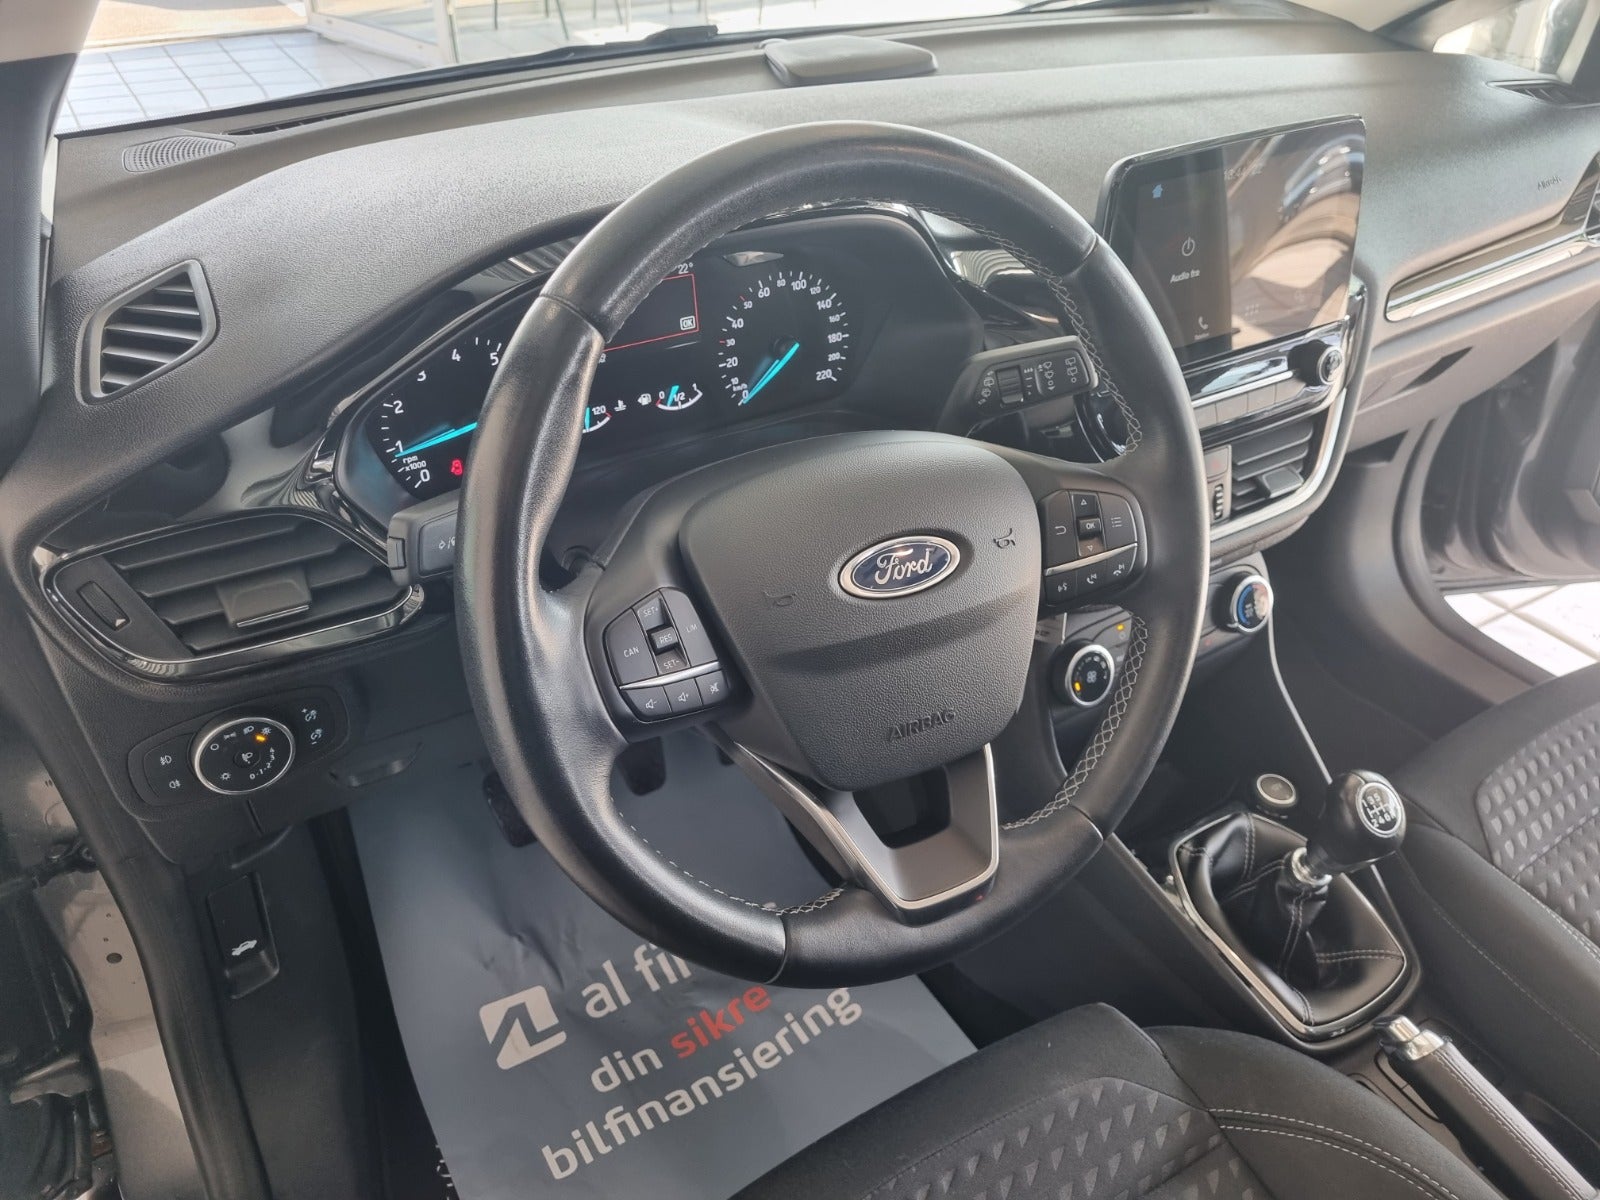 Ford Fiesta 2017